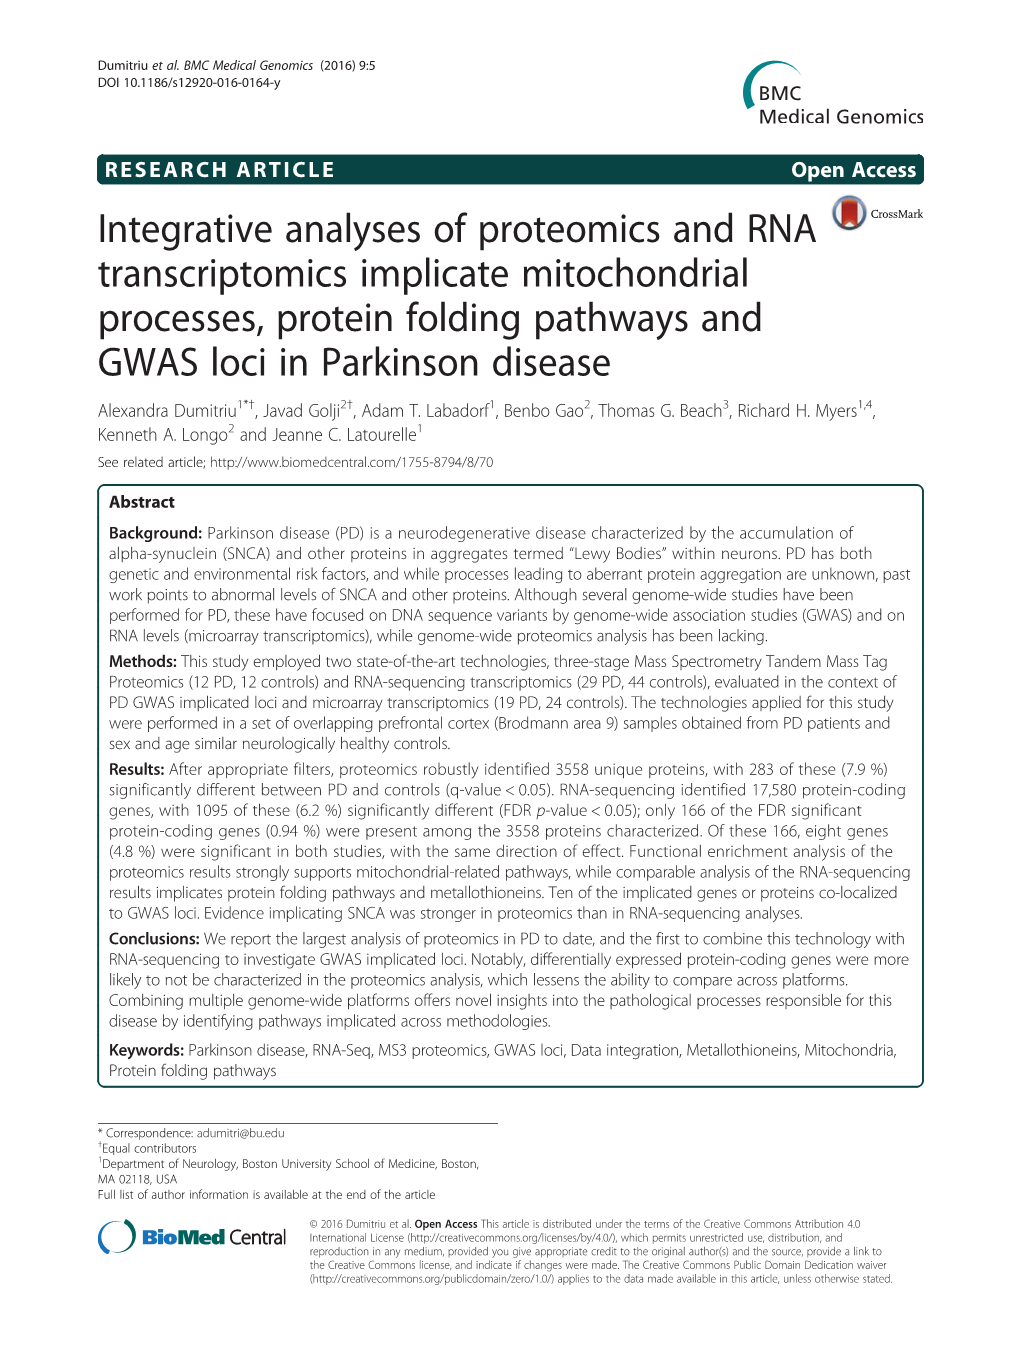 Integrative Analyses of Proteomics and RNA Transcriptomics Implicate